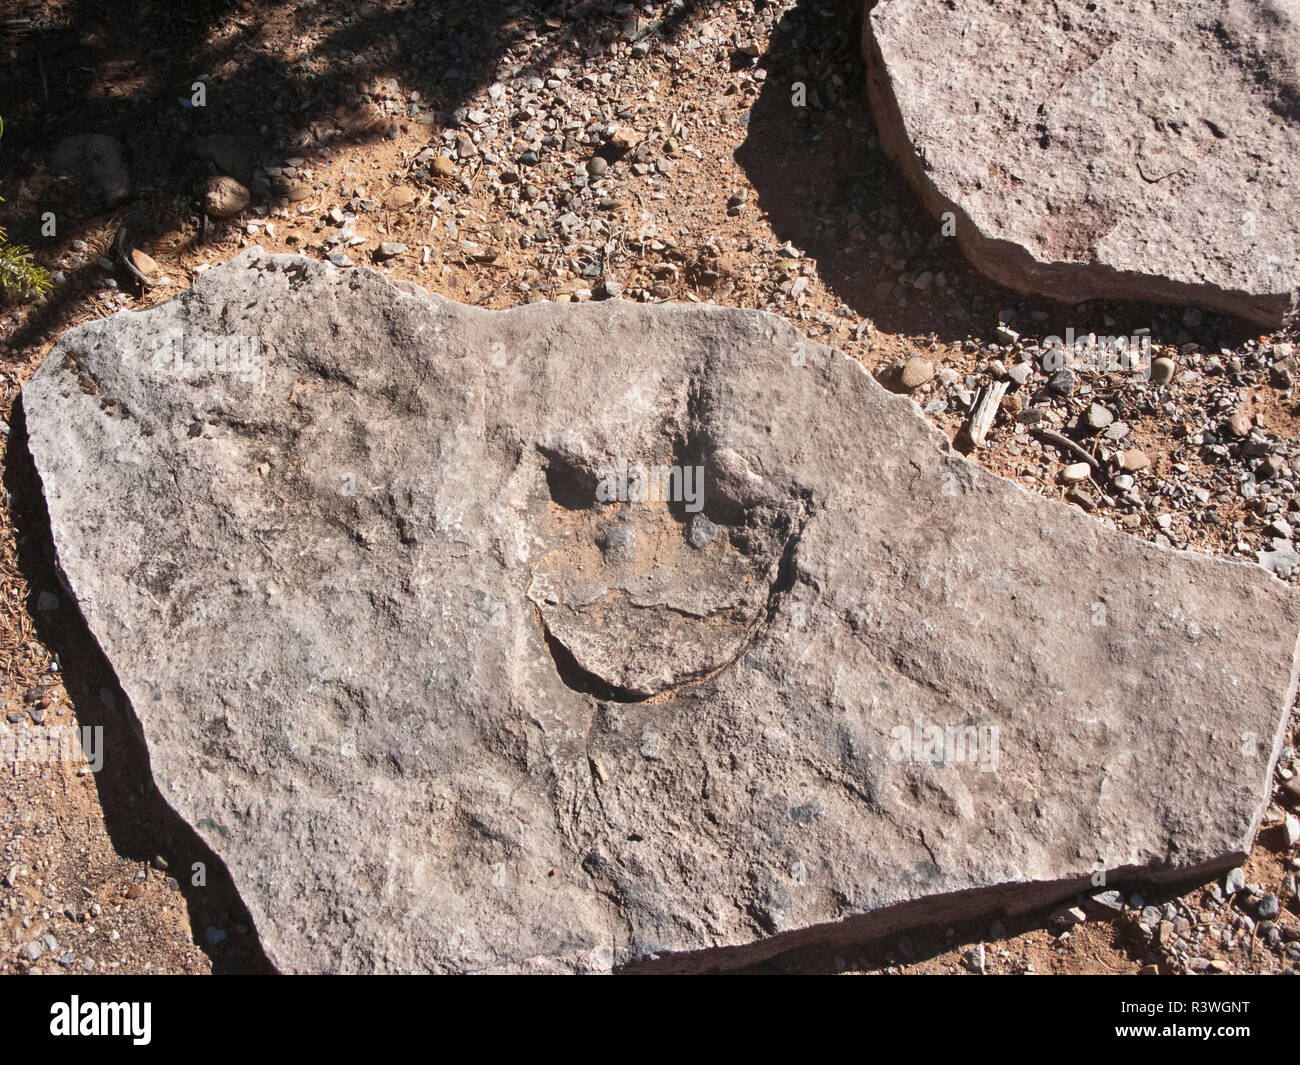 USA, Arizona, Tsegi, Navajo National Monument, Dinosaur Footprint Stock Photo